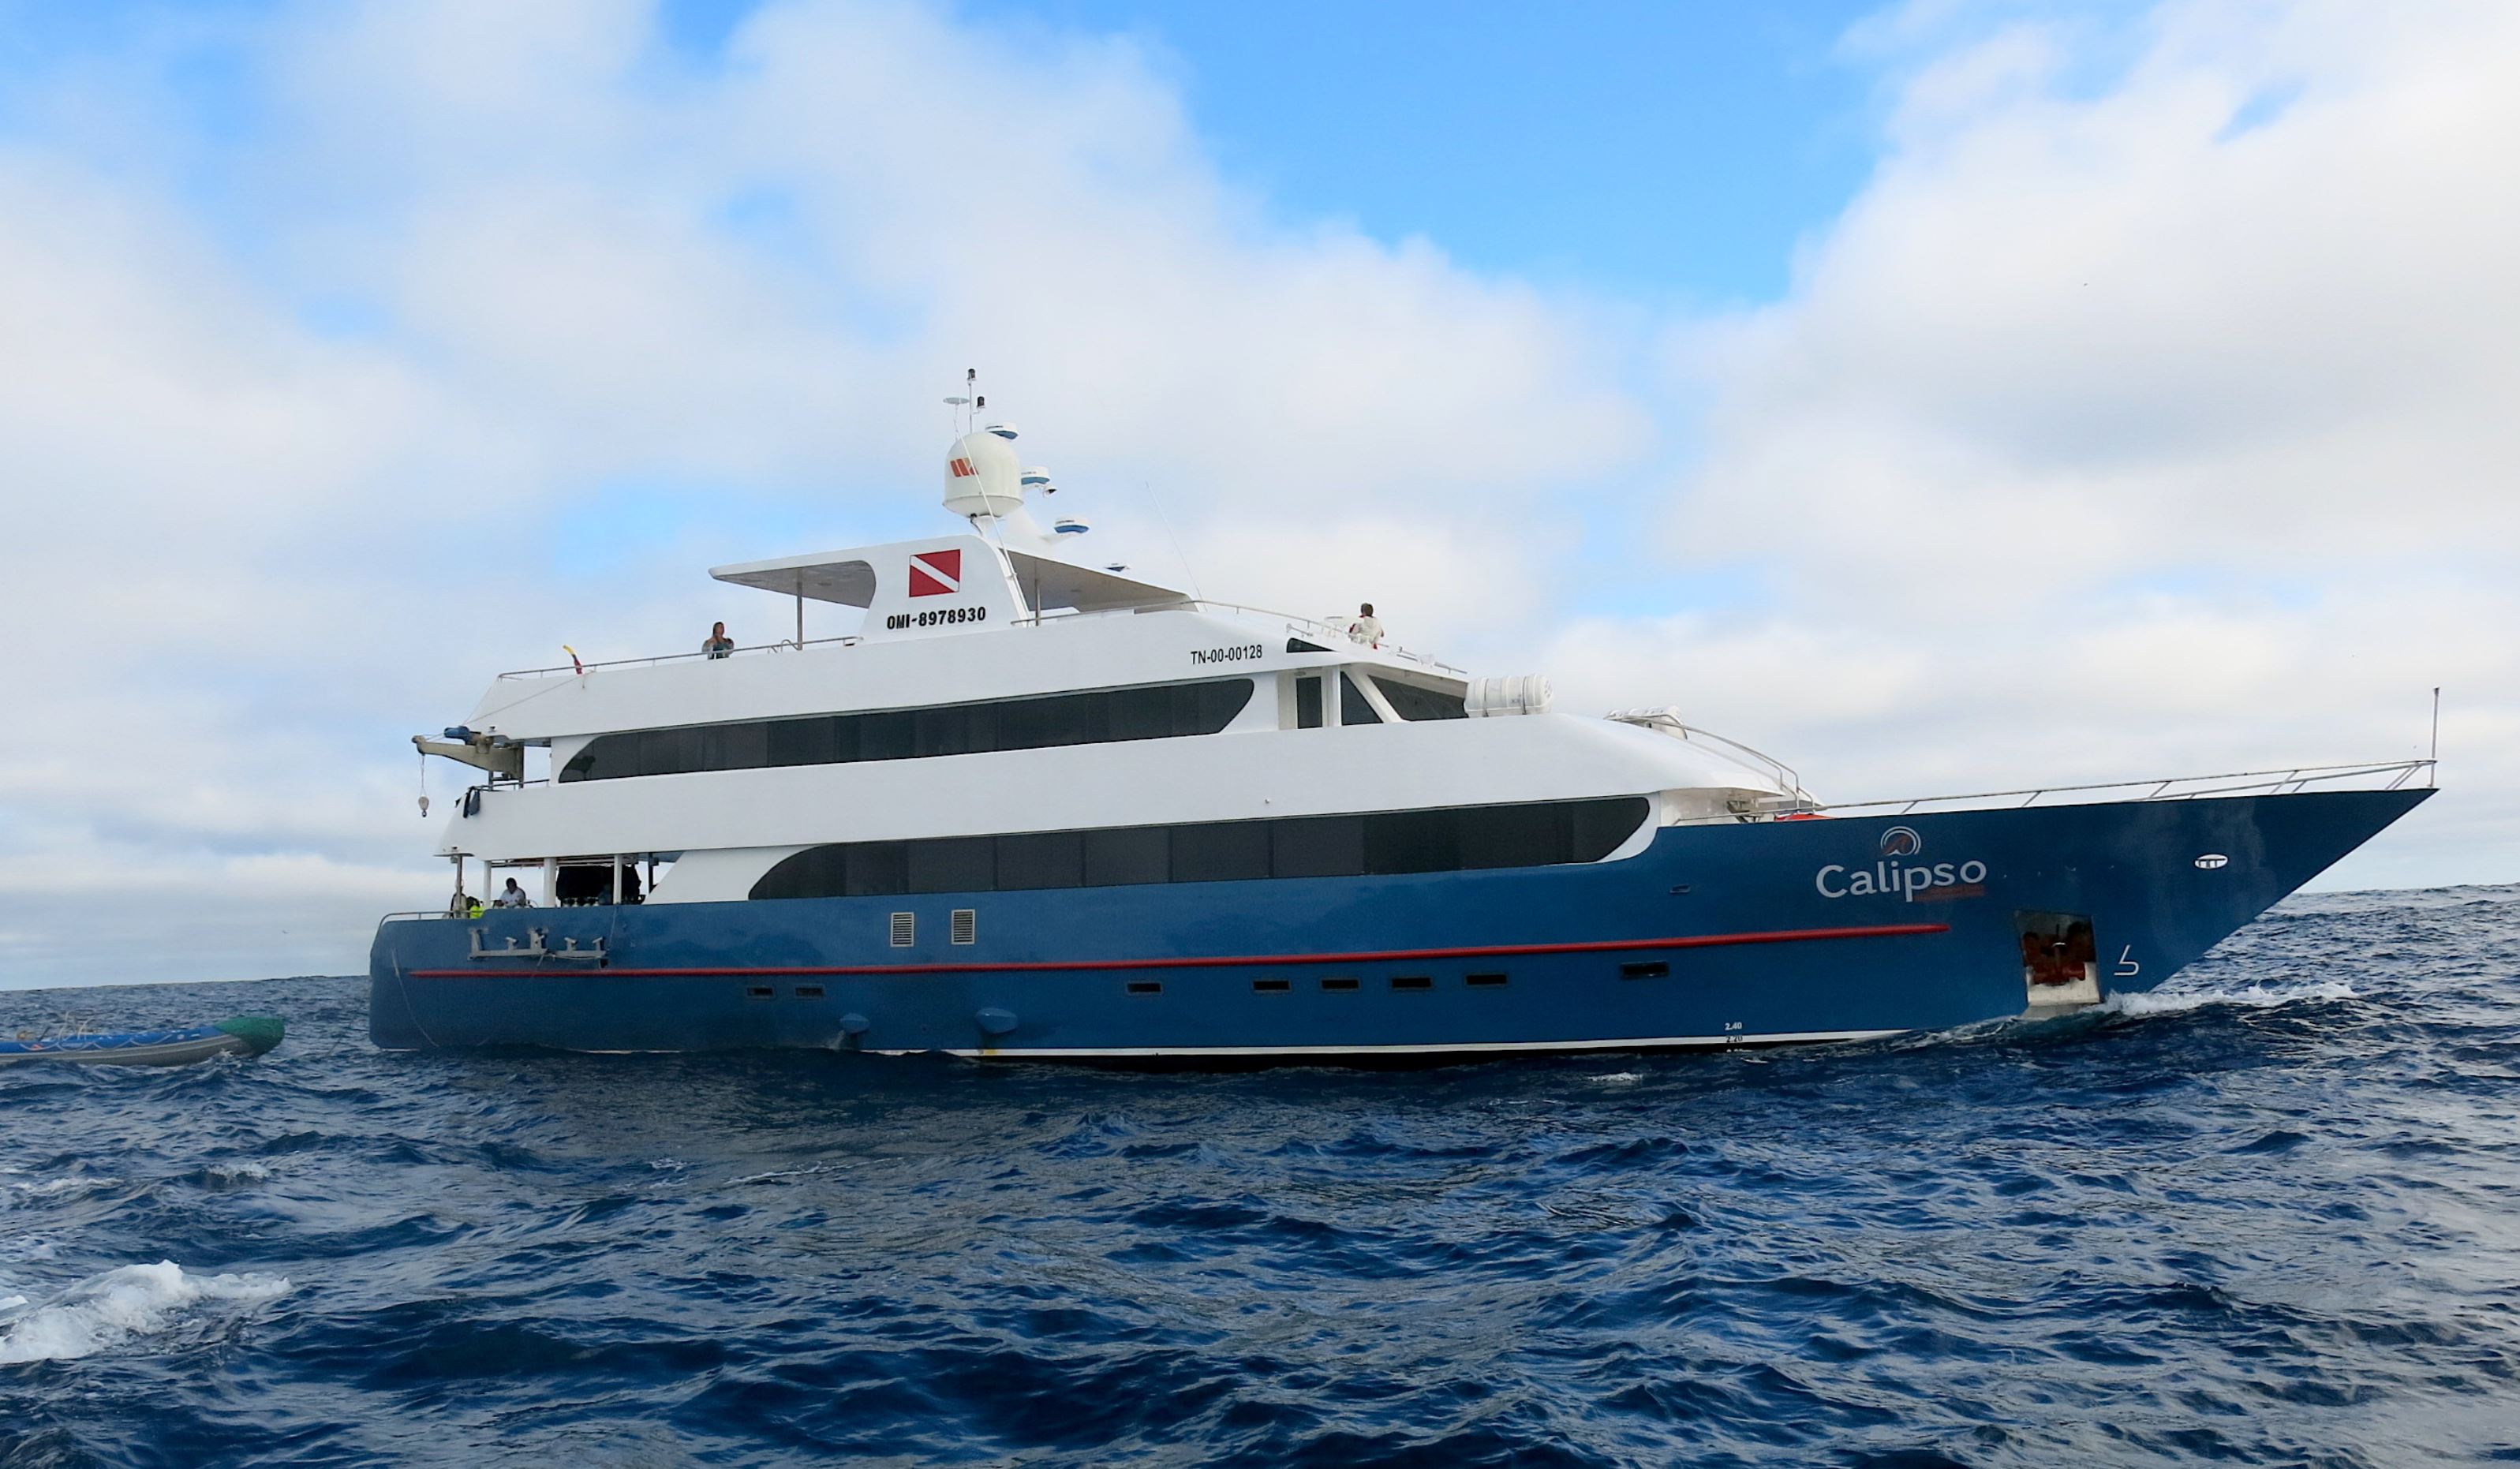 Calipso Divingyacht: Calipso Tauchyacht 8 Tage/7 Nächte Kreuzfahrt mit der Wolf & Darwin Insel (18 dives)